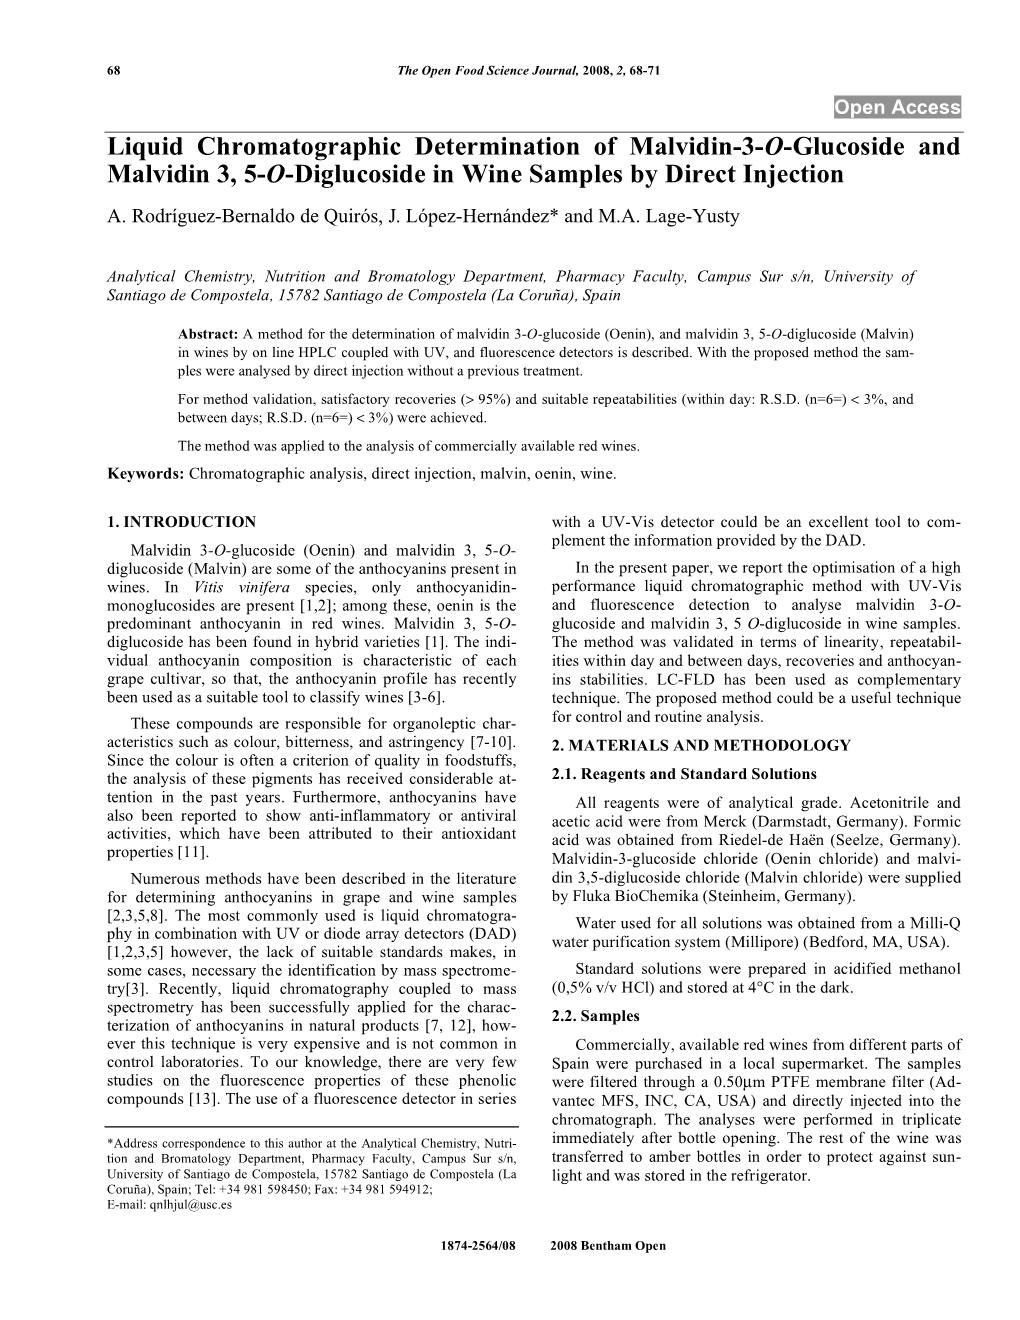 Liquid Chromatographic Determination of Malvidin-3-O-Glucoside and Malvidin 3, 5-O-Diglucoside in Wine Samples by Direct Injection A